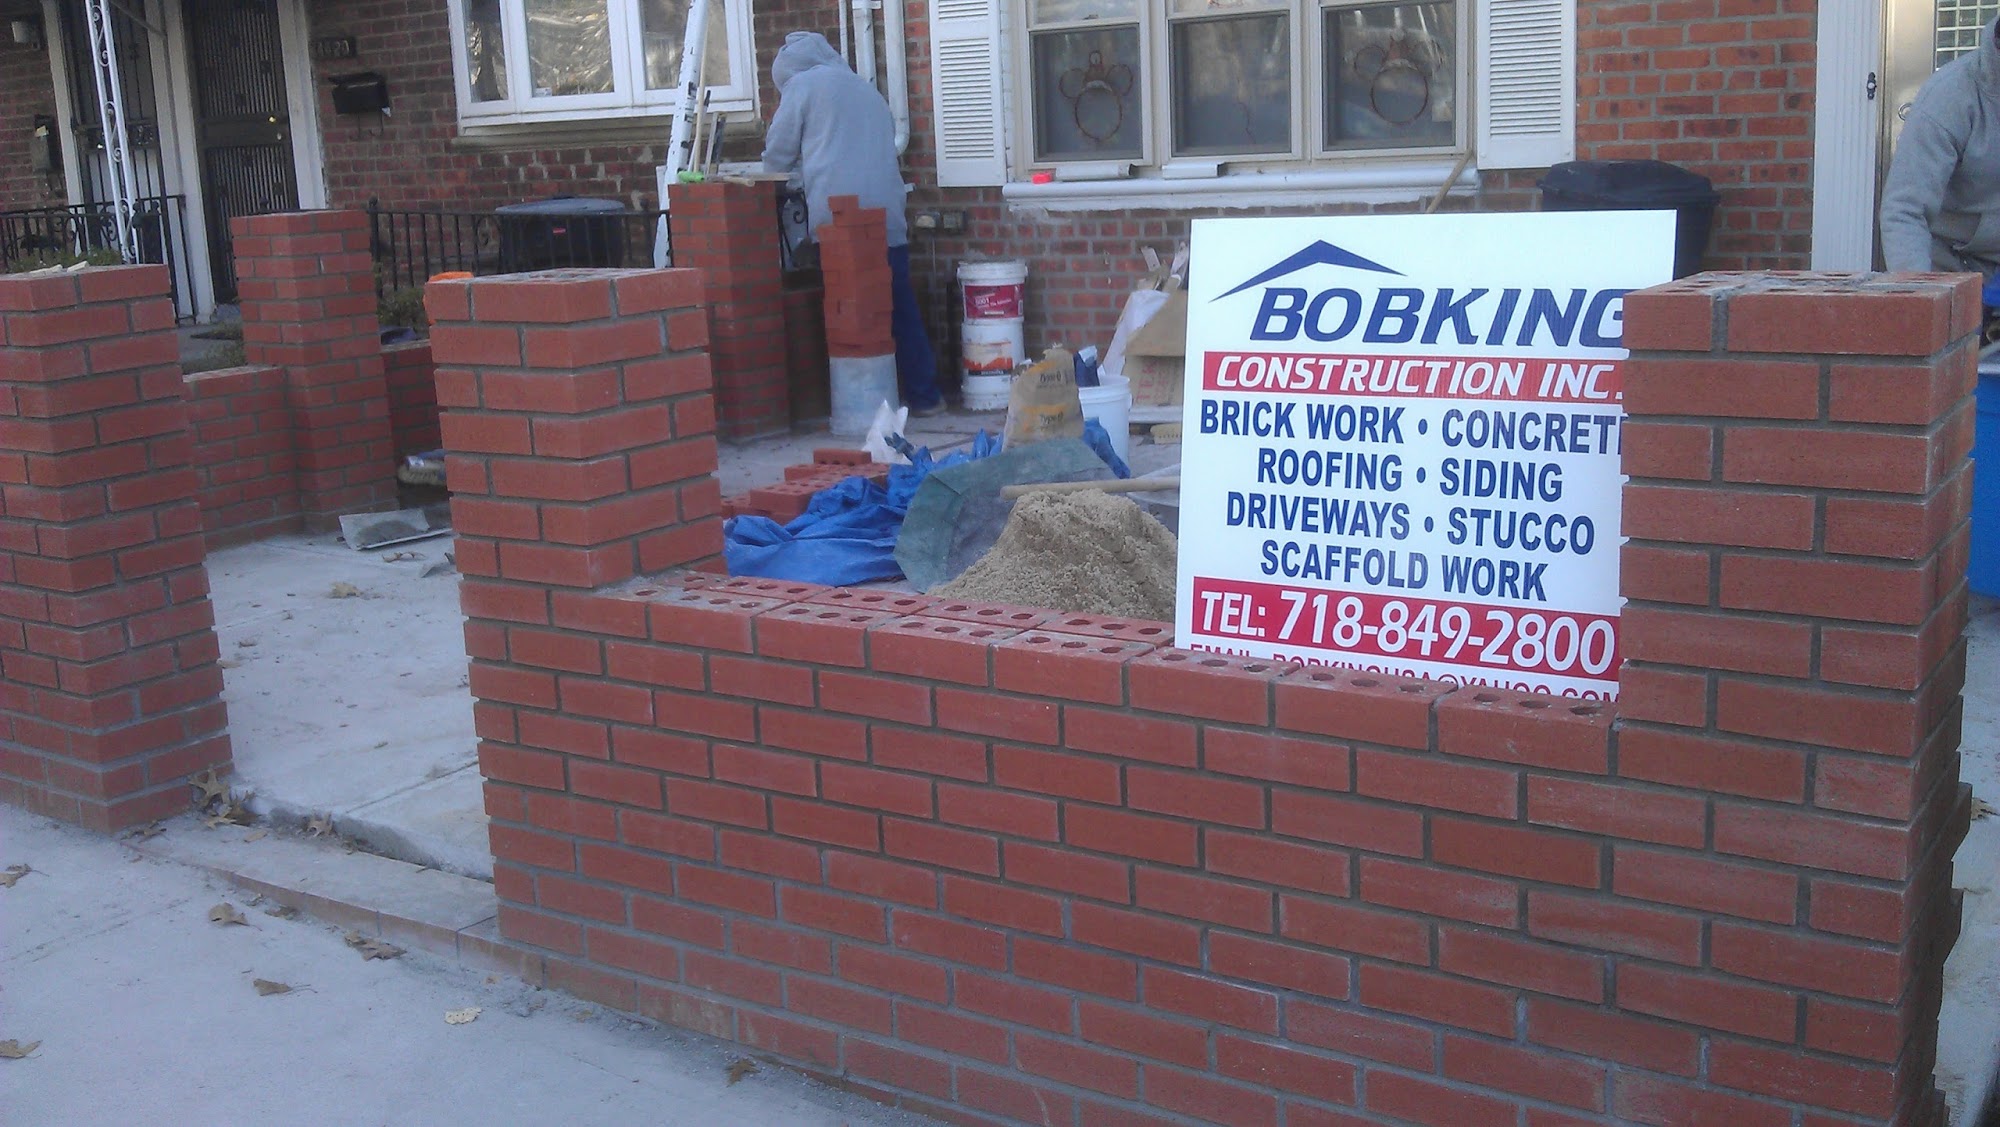 Bobking Construction inc